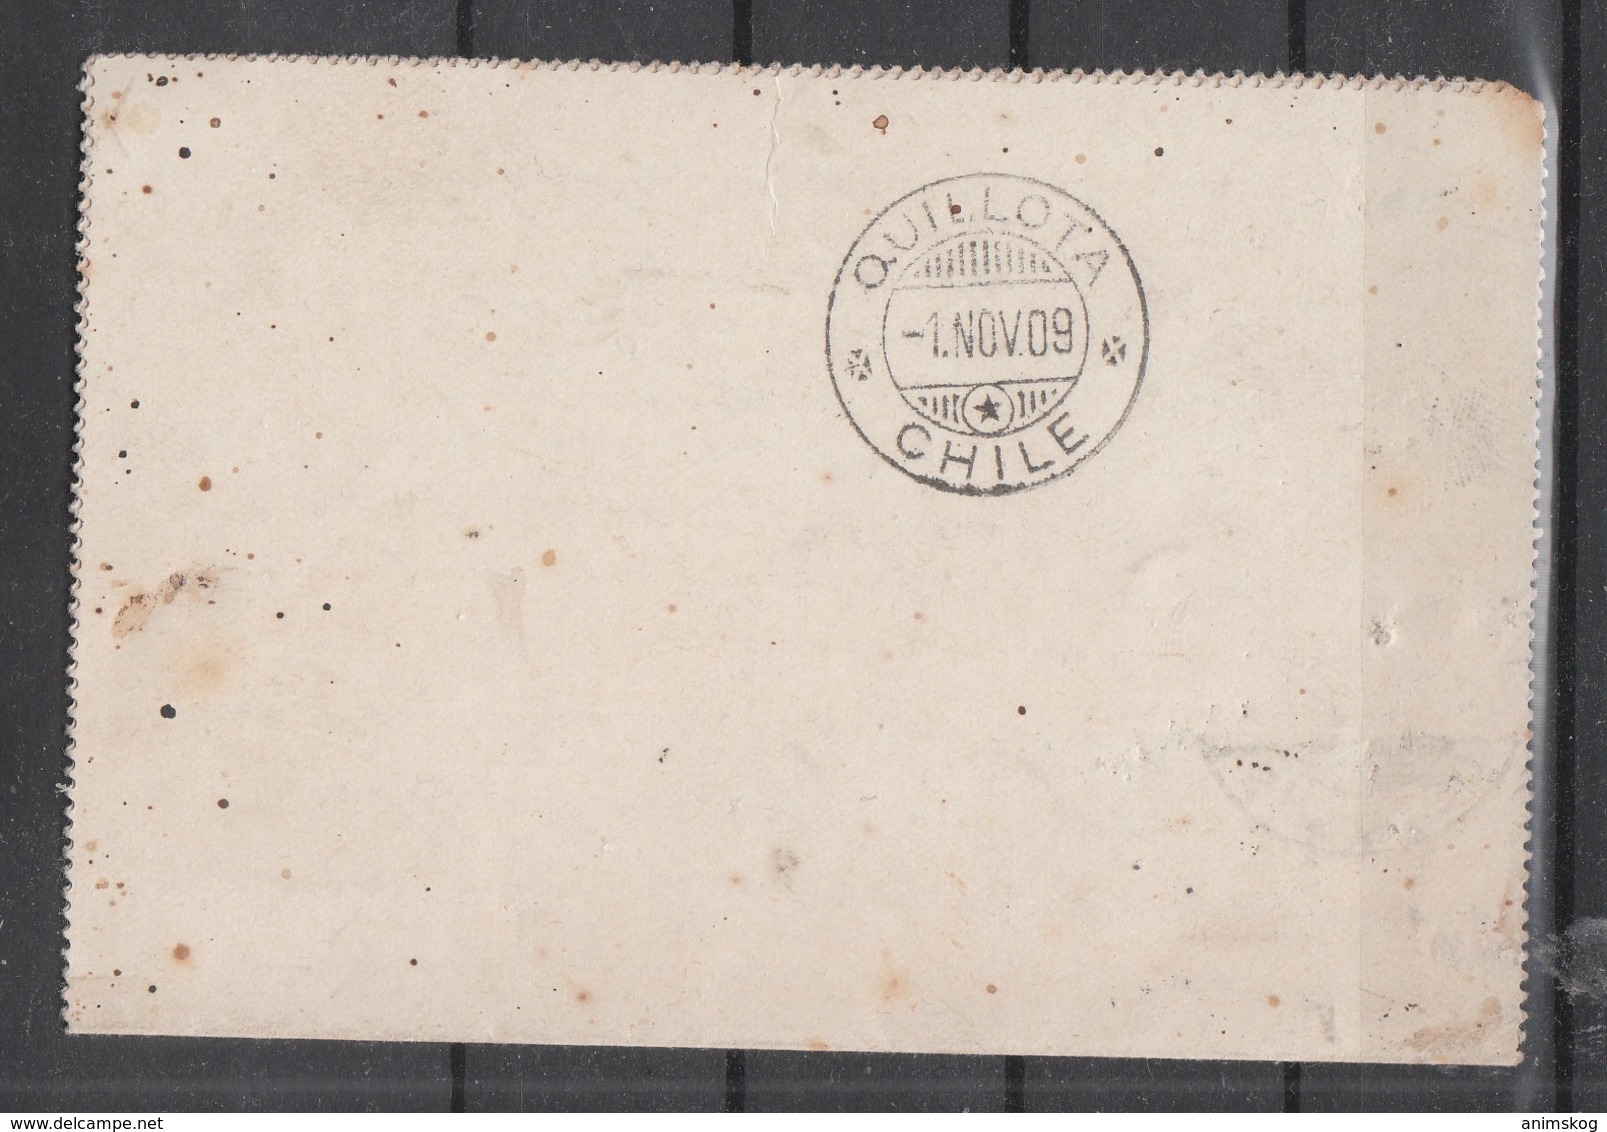 Chile 1909, Memorandum Postage, Gelaufen / Chile 1909, Memorandum Postage, Postally Used - Cile